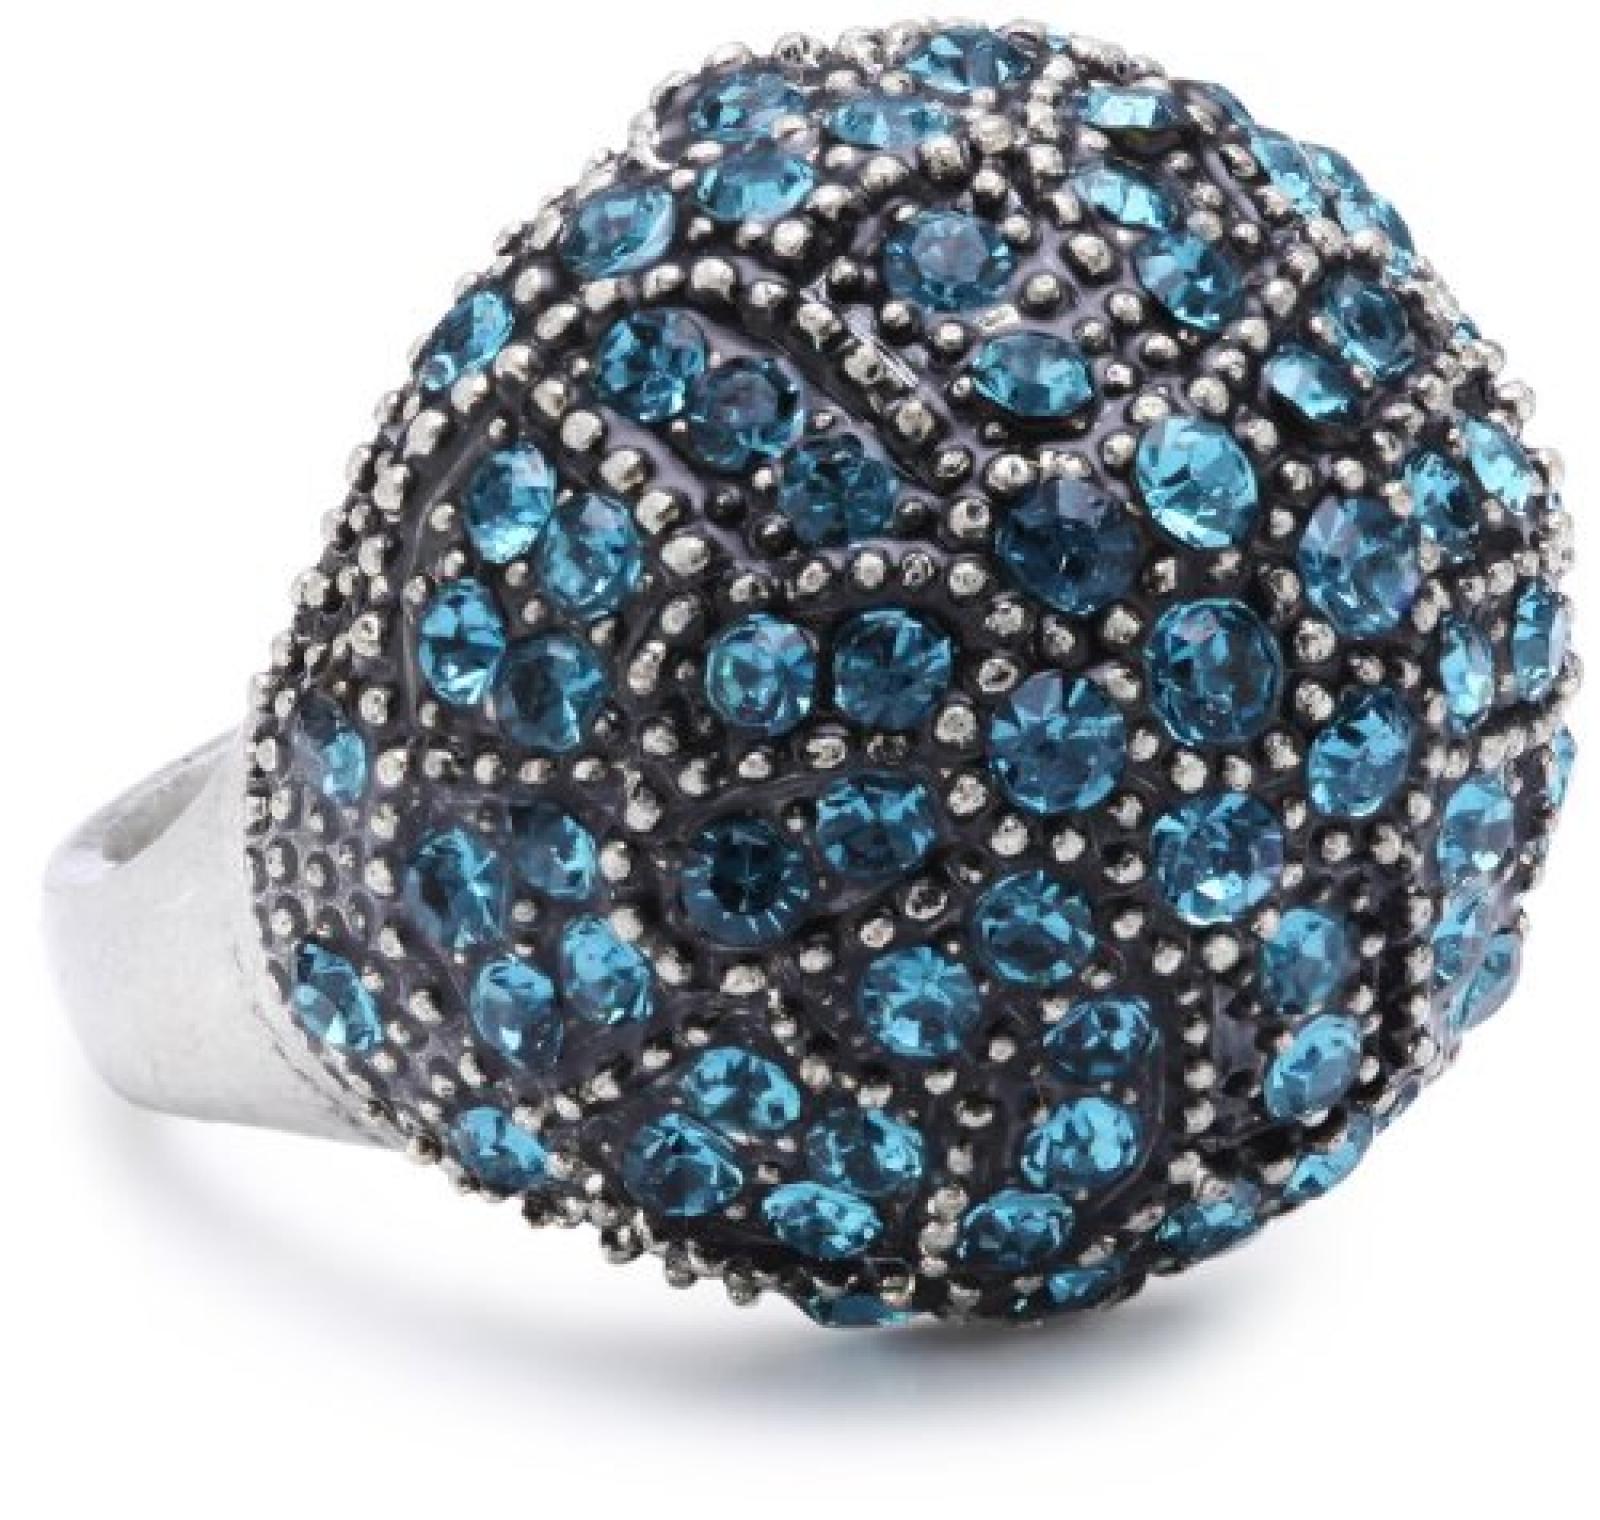 Pilgrim Jewelry Damen-Ring aus der Serie Desert queen versilbert blau verstellbar 2.0 cm 141236204 